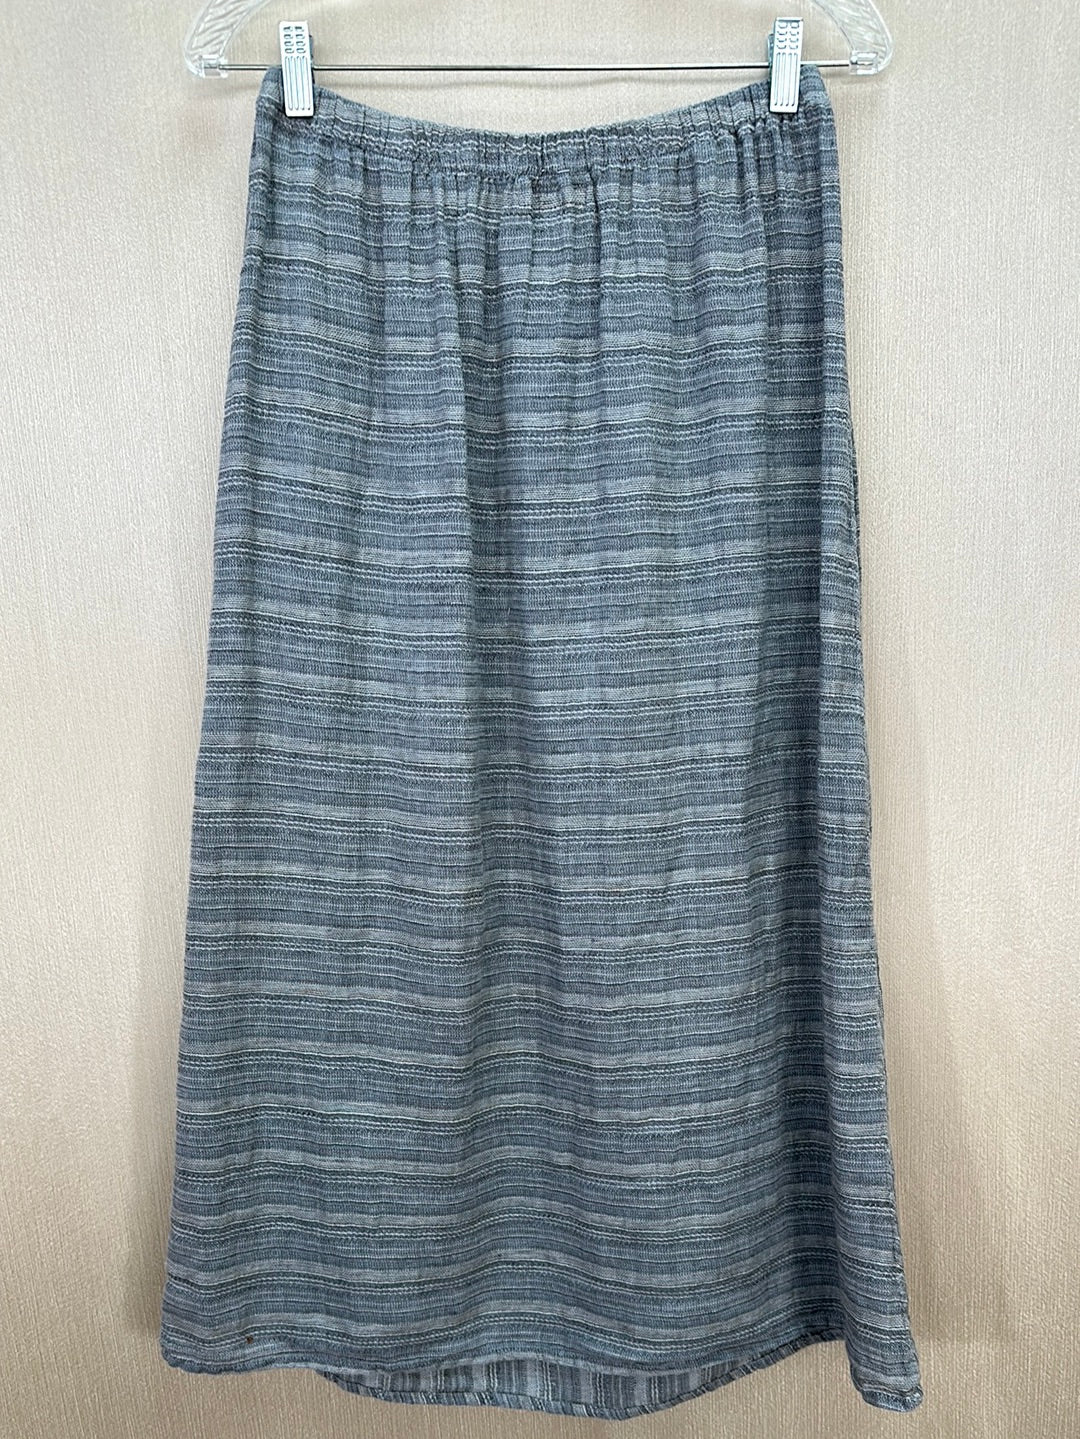 FLAX grey Stripe Lightweight Loose Weave Linen Midi Skirt - S